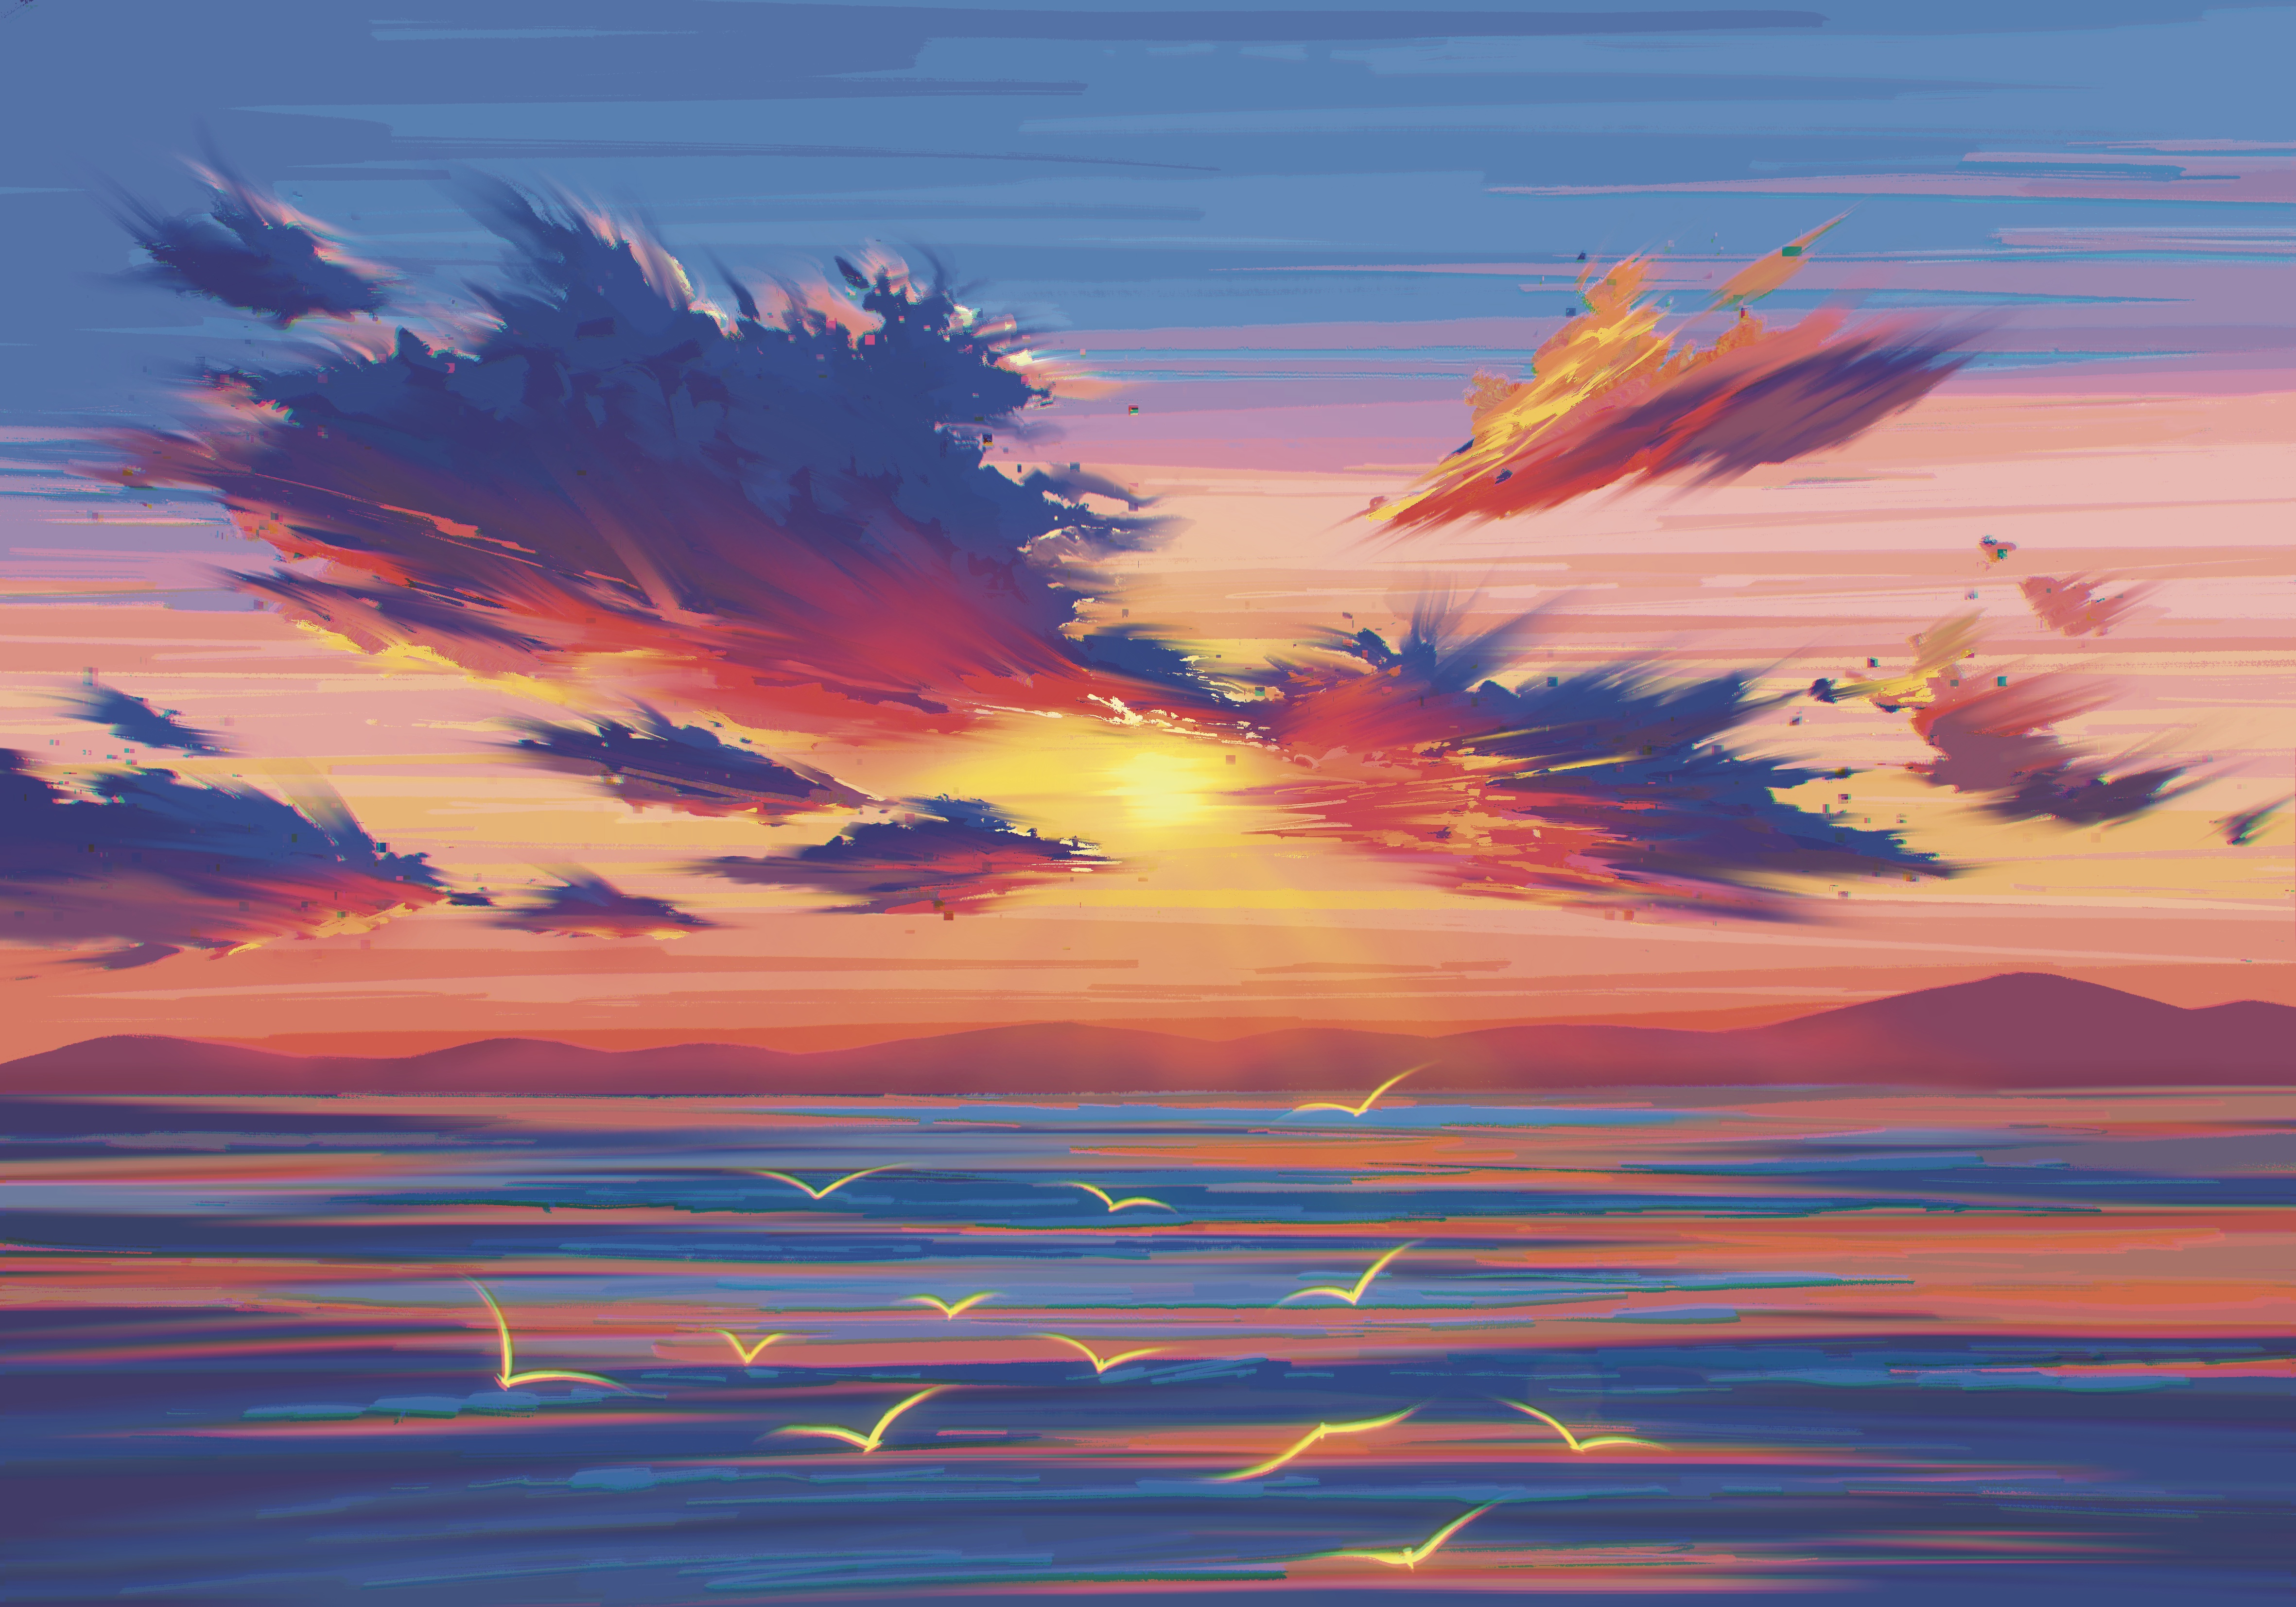 General 4724x3307 digital art artwork illustration painting landscape clouds sea water mountains Sun sunlight sunset birds animals sky